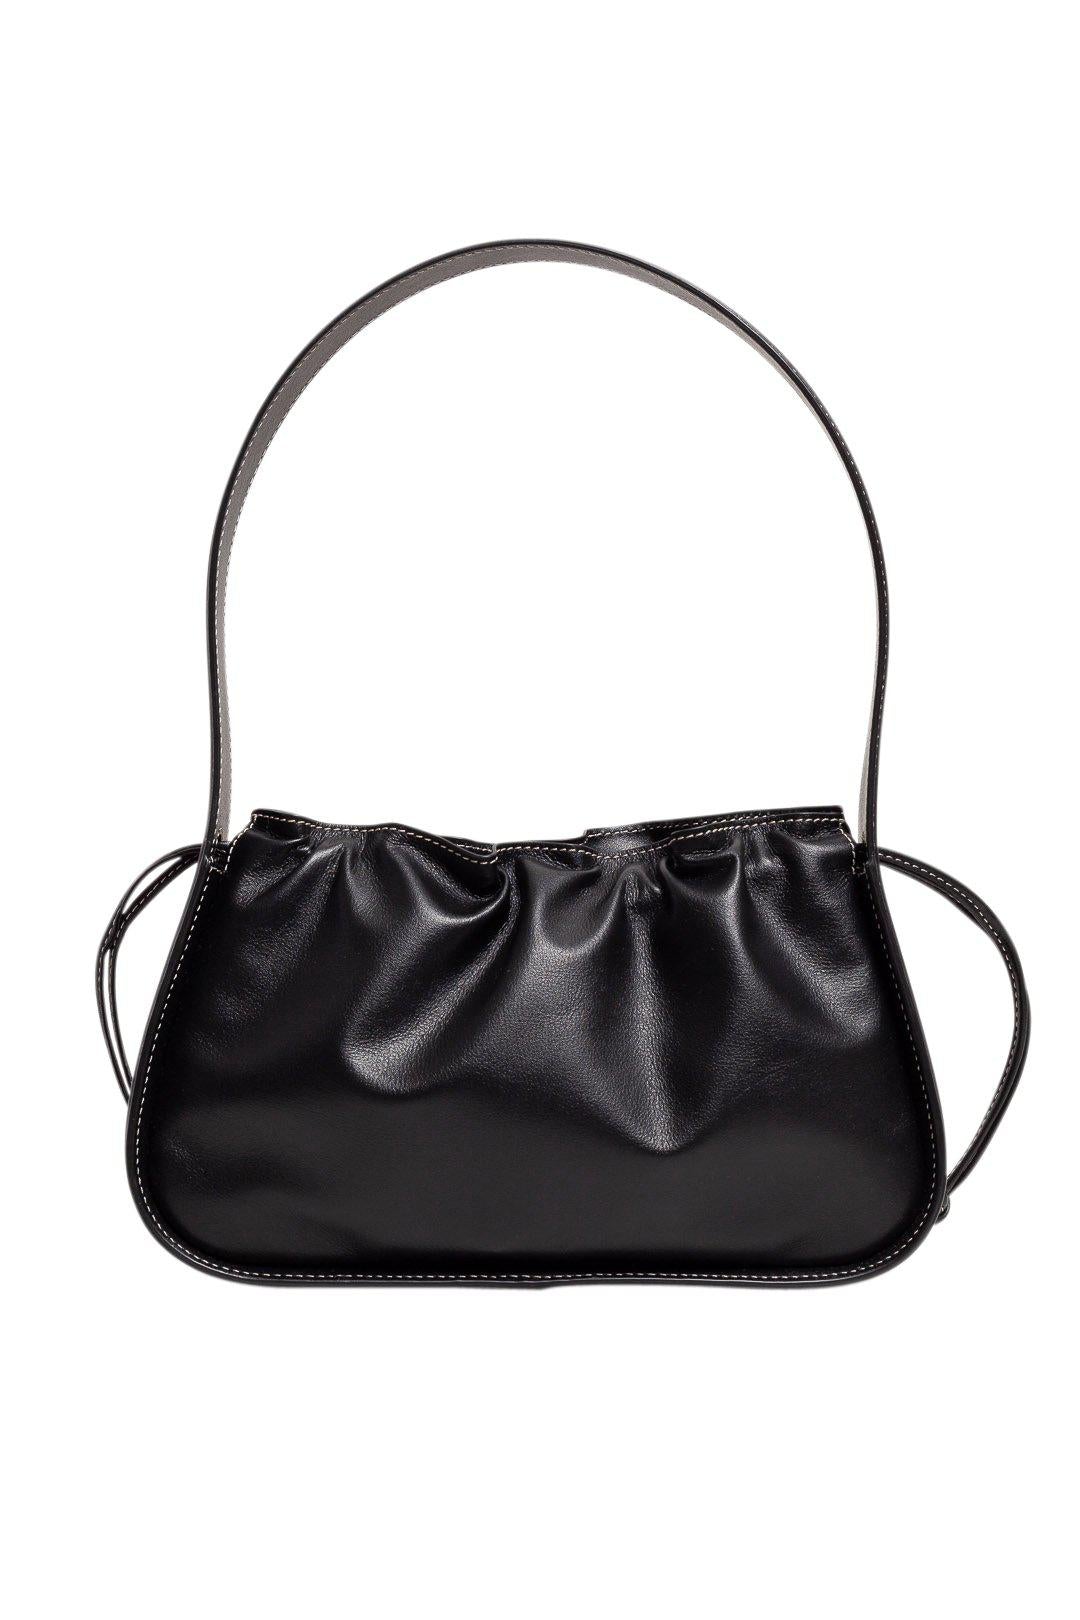 YUZEFI-Scrunch leather handbag-YUZCO-HB-SC-00.OS-dgallerystore